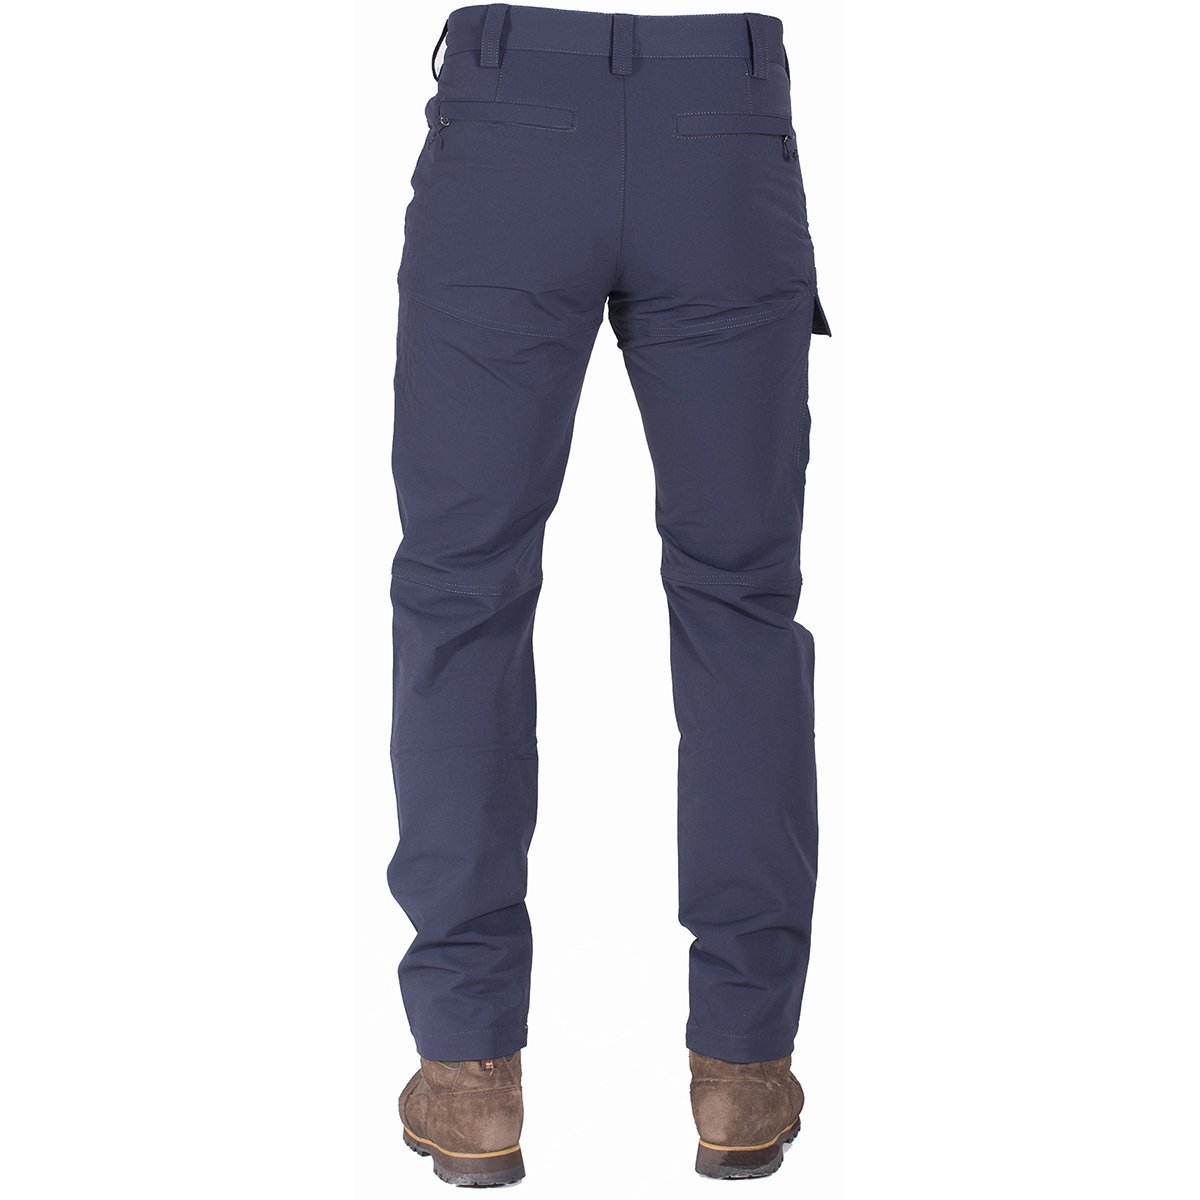 Winter Pants - Buy Warm Pants for Men Online at Adventuras